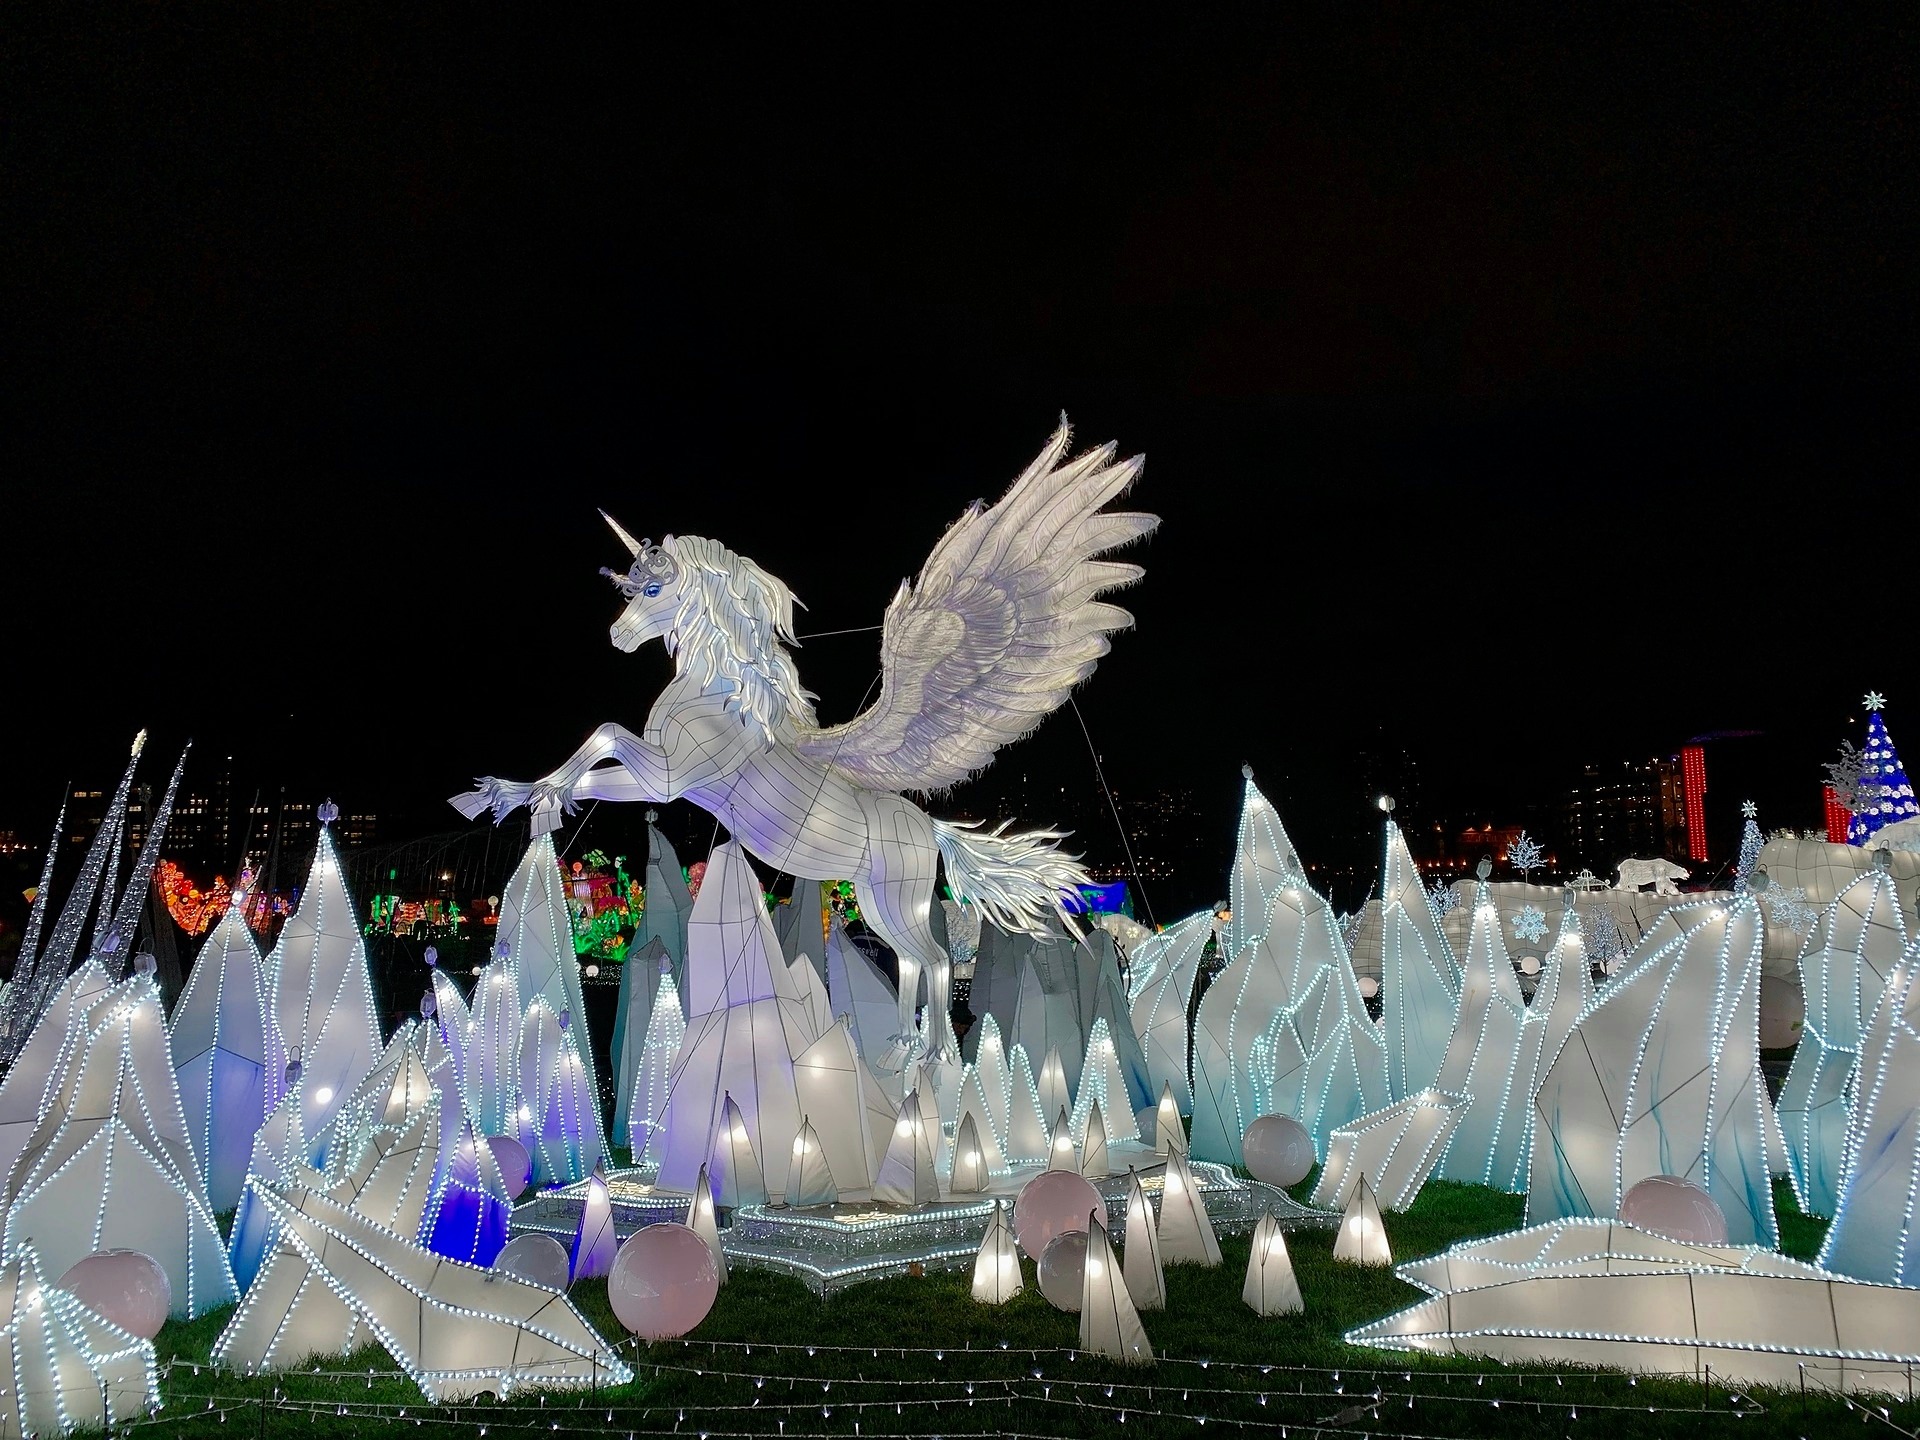 A unicorn on ice made of lights